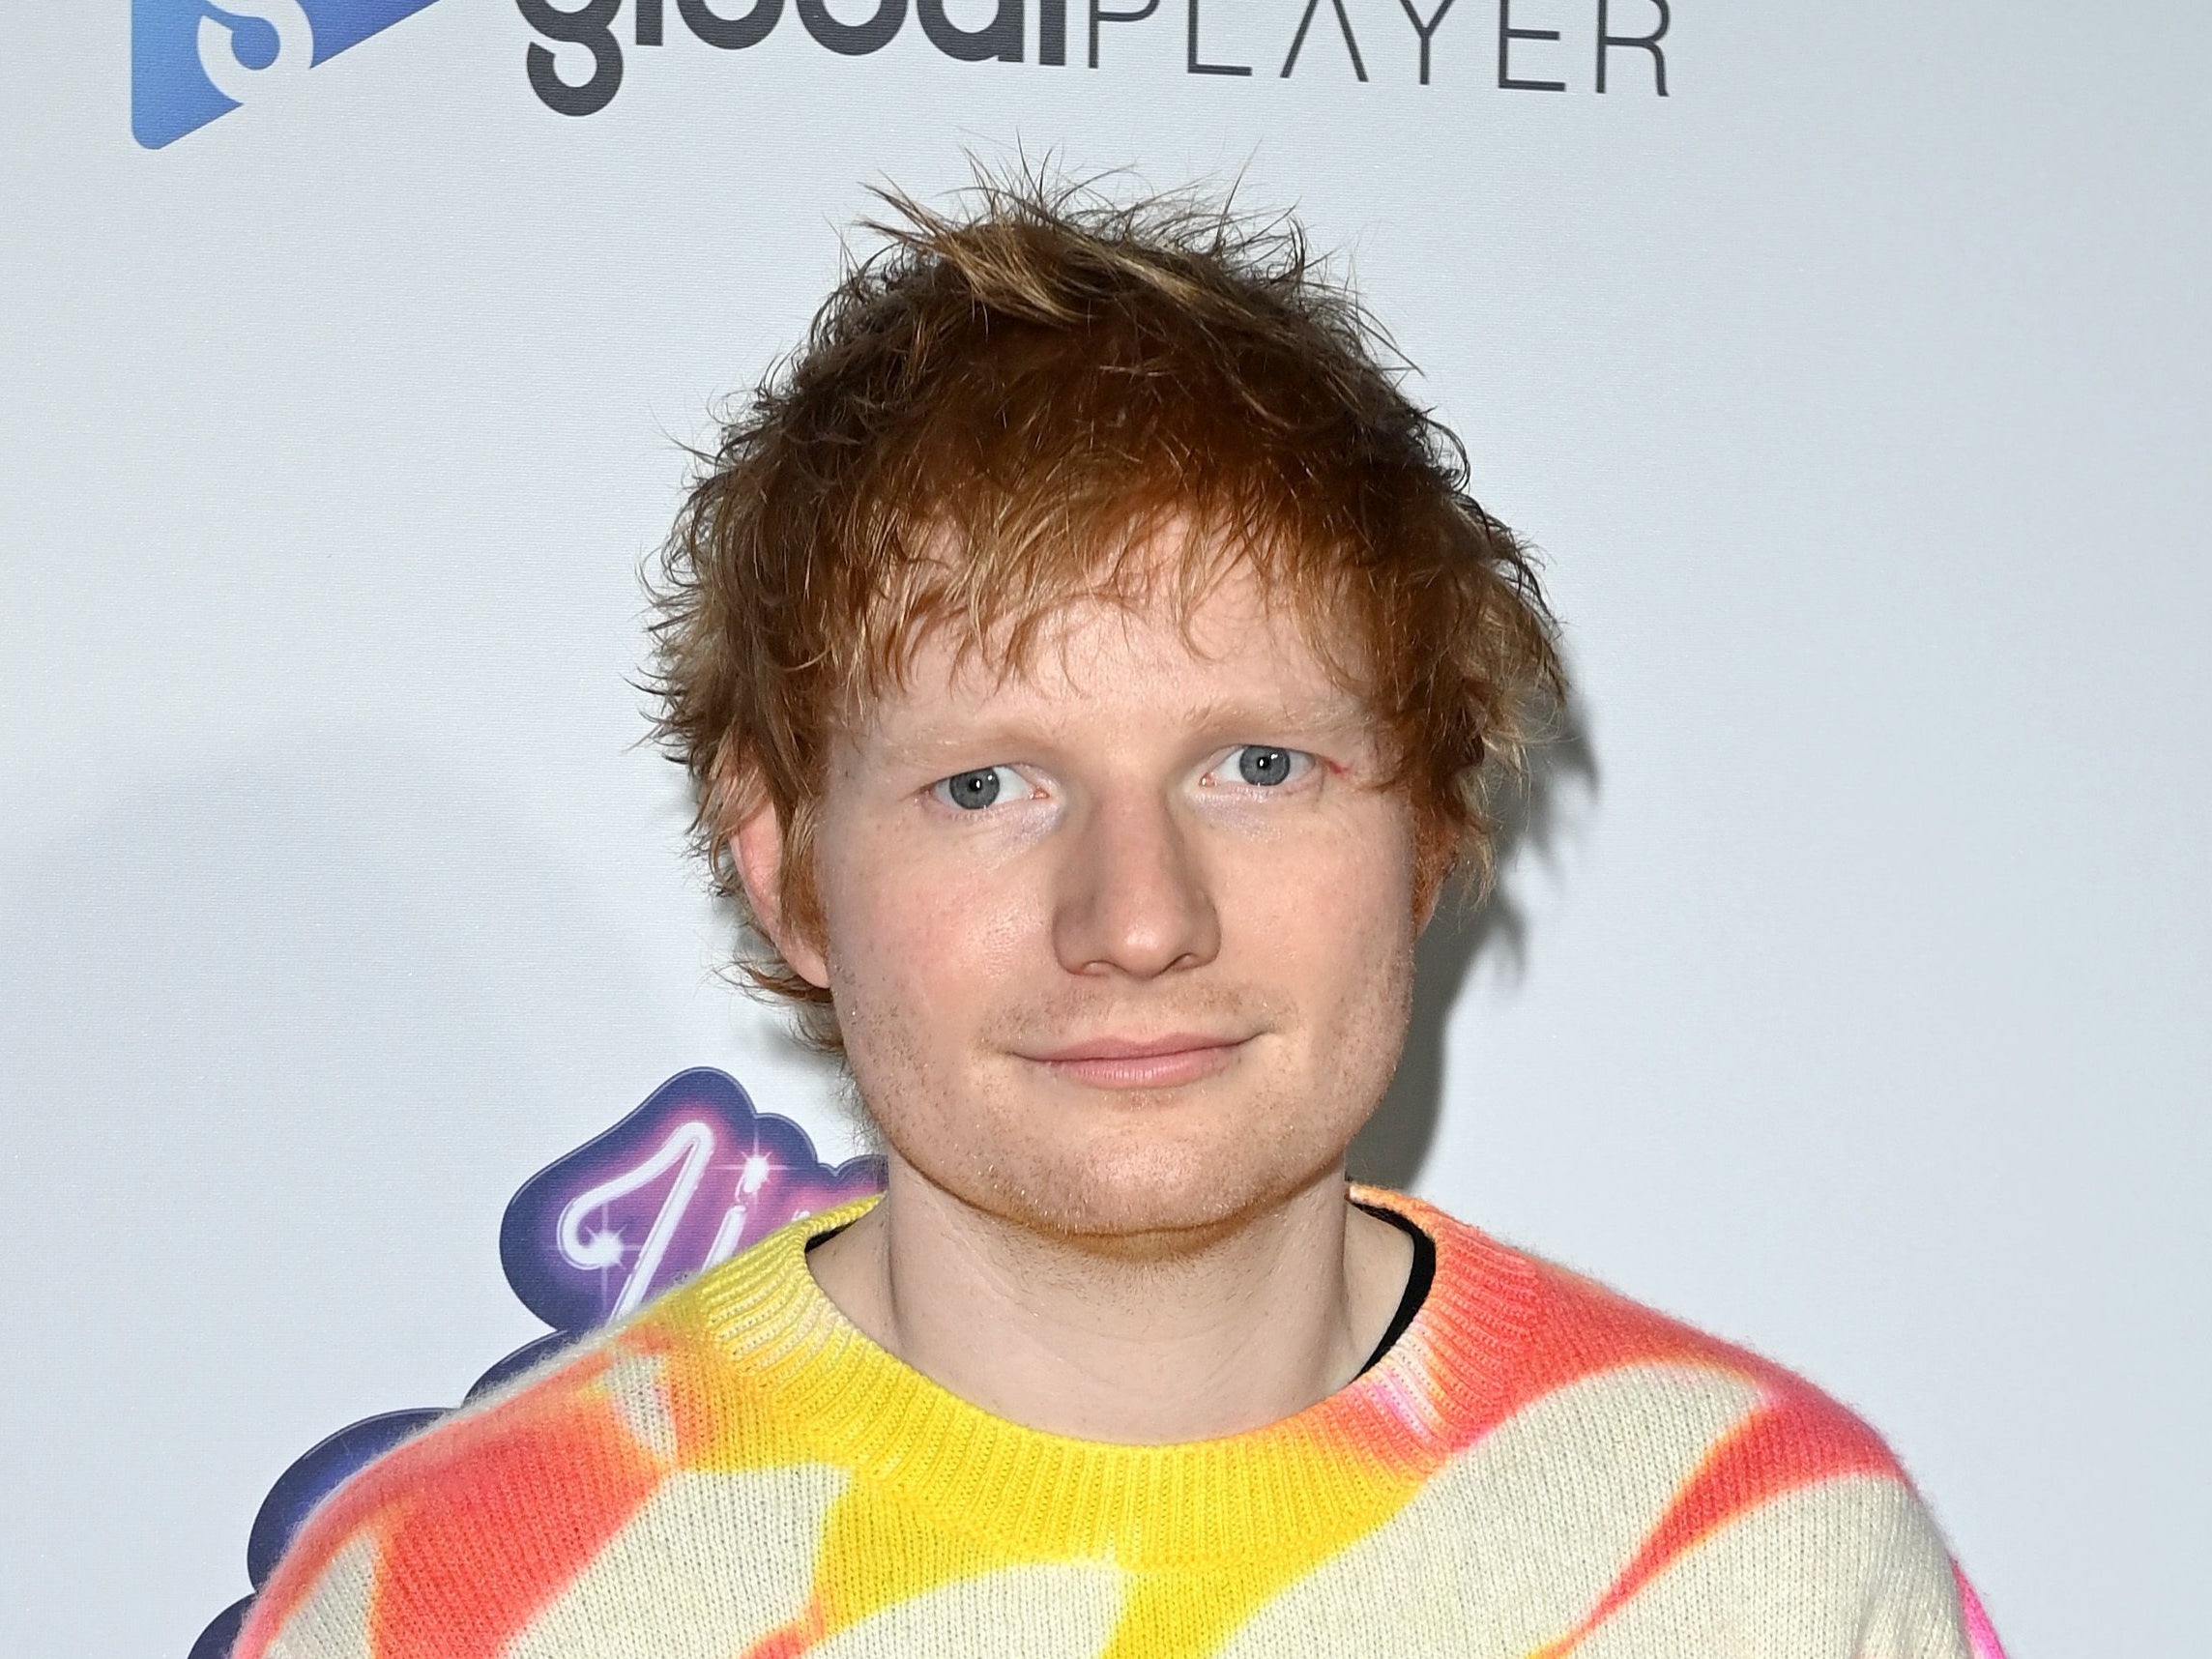 Ed Sheeran said he’s still a ‘South Park’ fan despite poking fun at ginger people